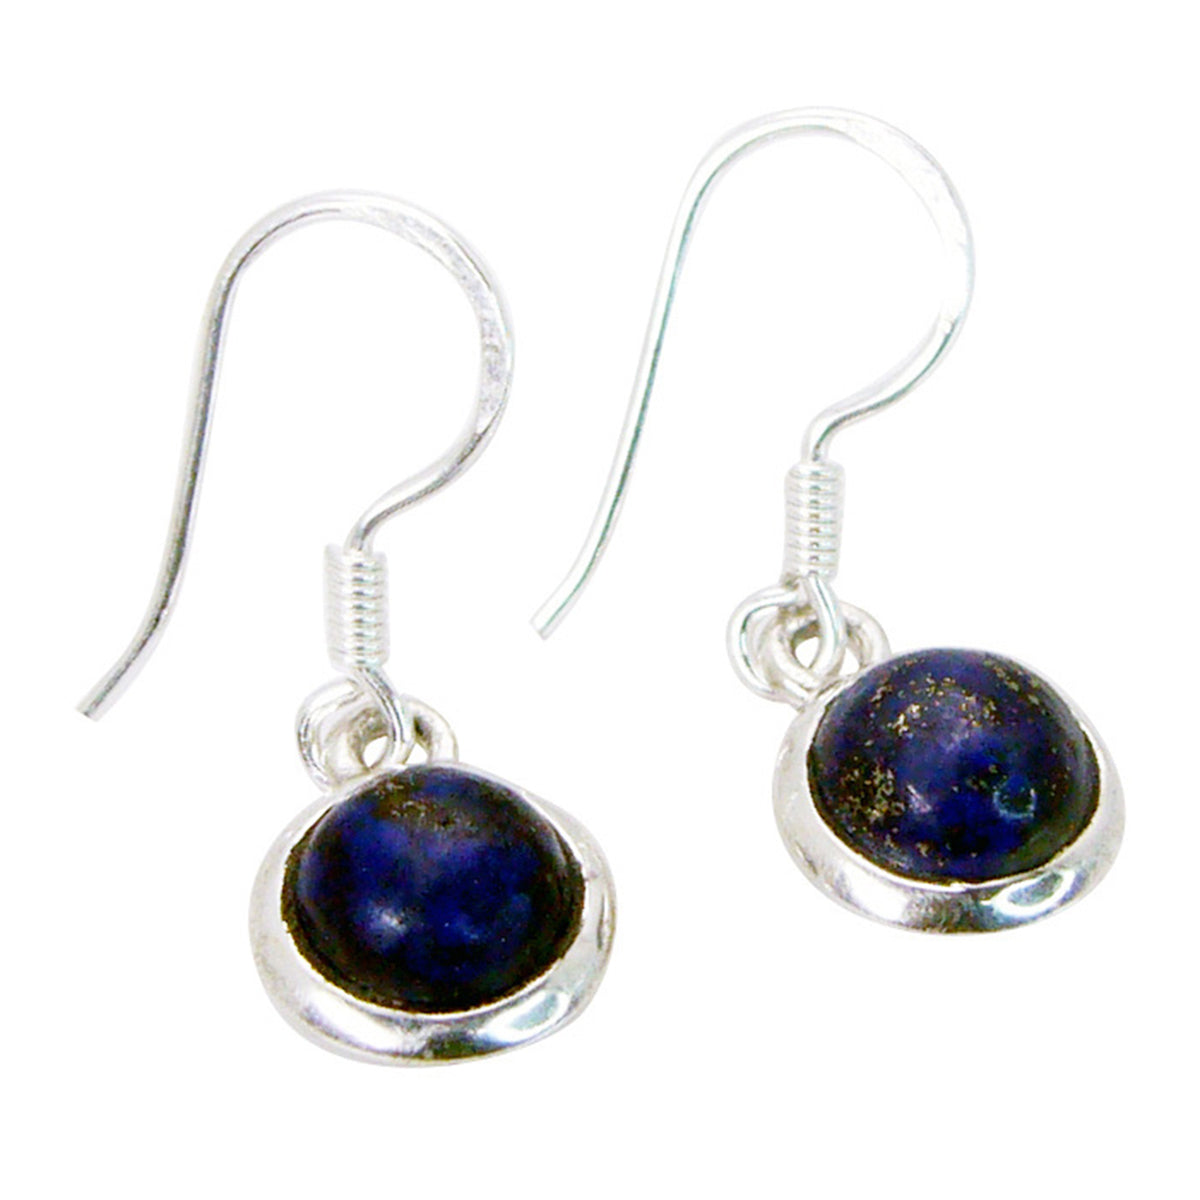 Riyo Natural Gemstone round Cabochon Nevy Blue Lapis Lazuli Silver Earrings cyber Monday gift